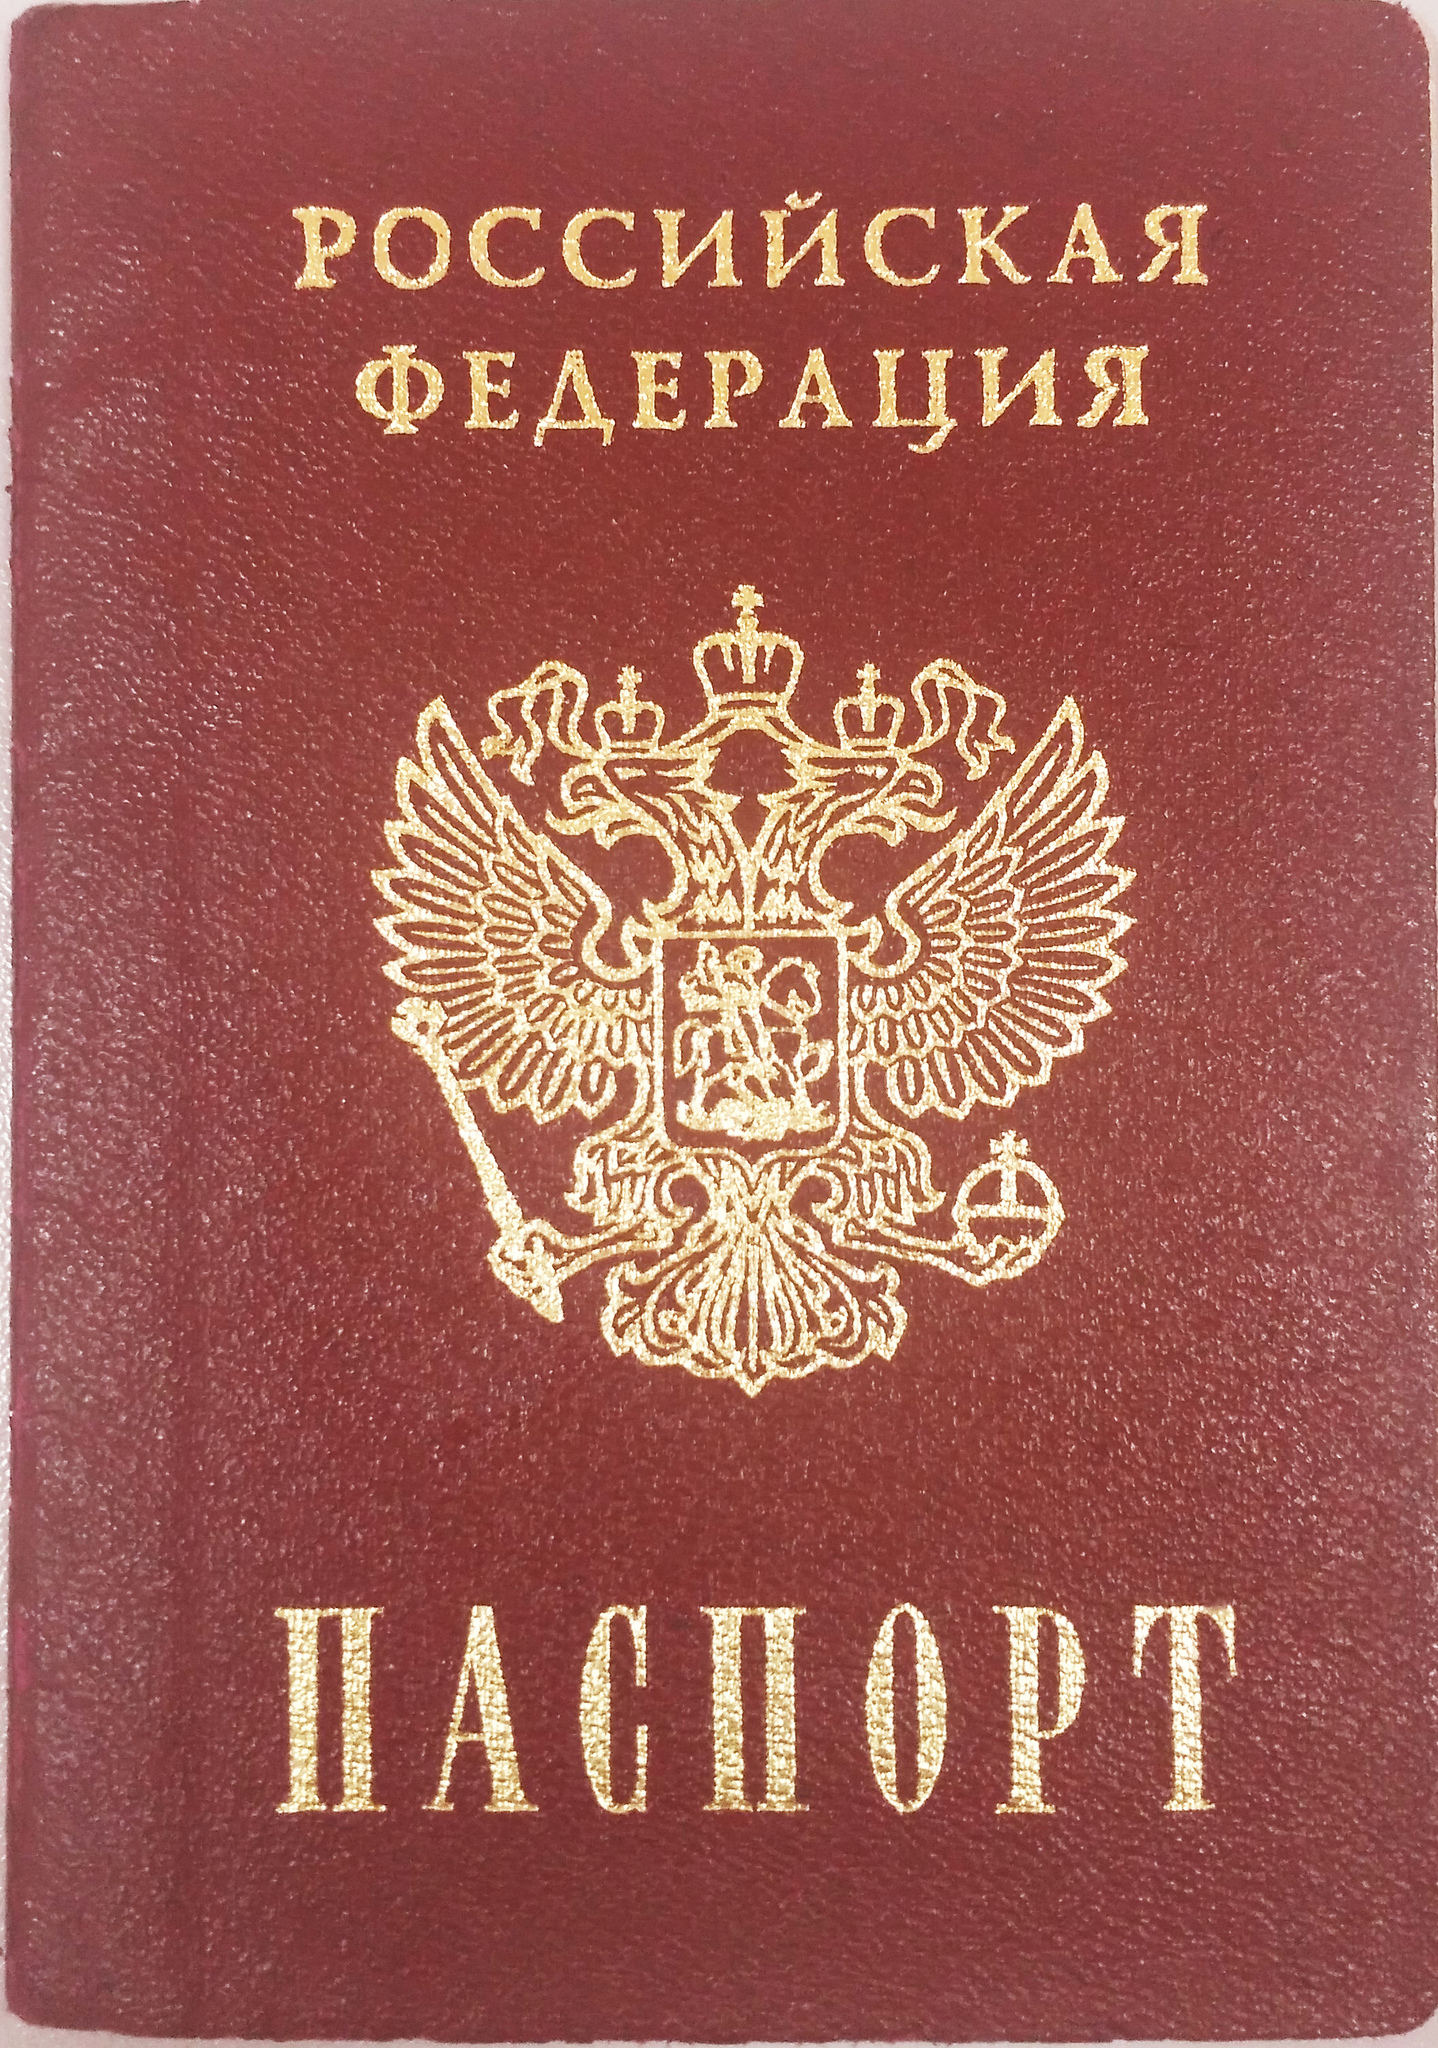 Паспорт печать на торт